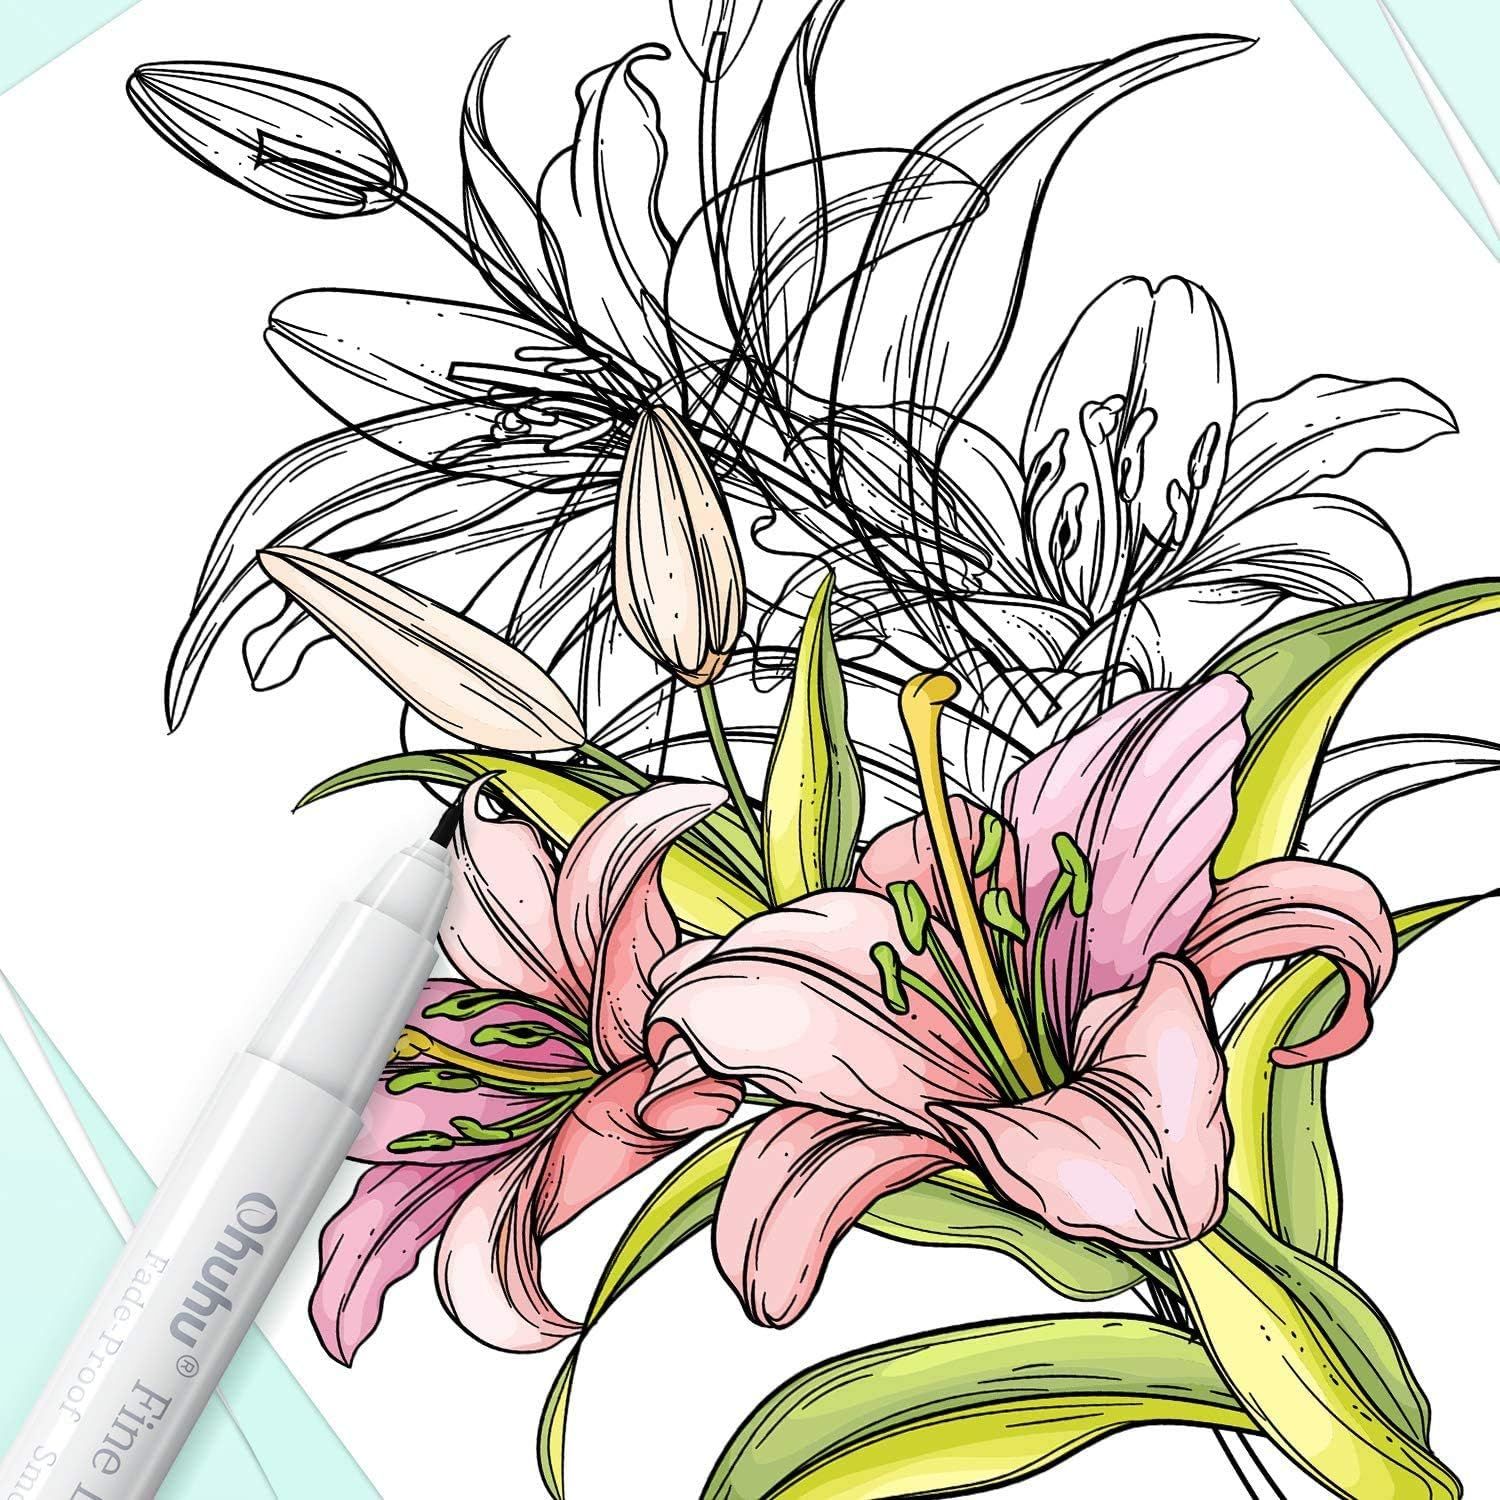 Ohuhu Fineliner Drawing Pen, 8 Pack – ohuhu